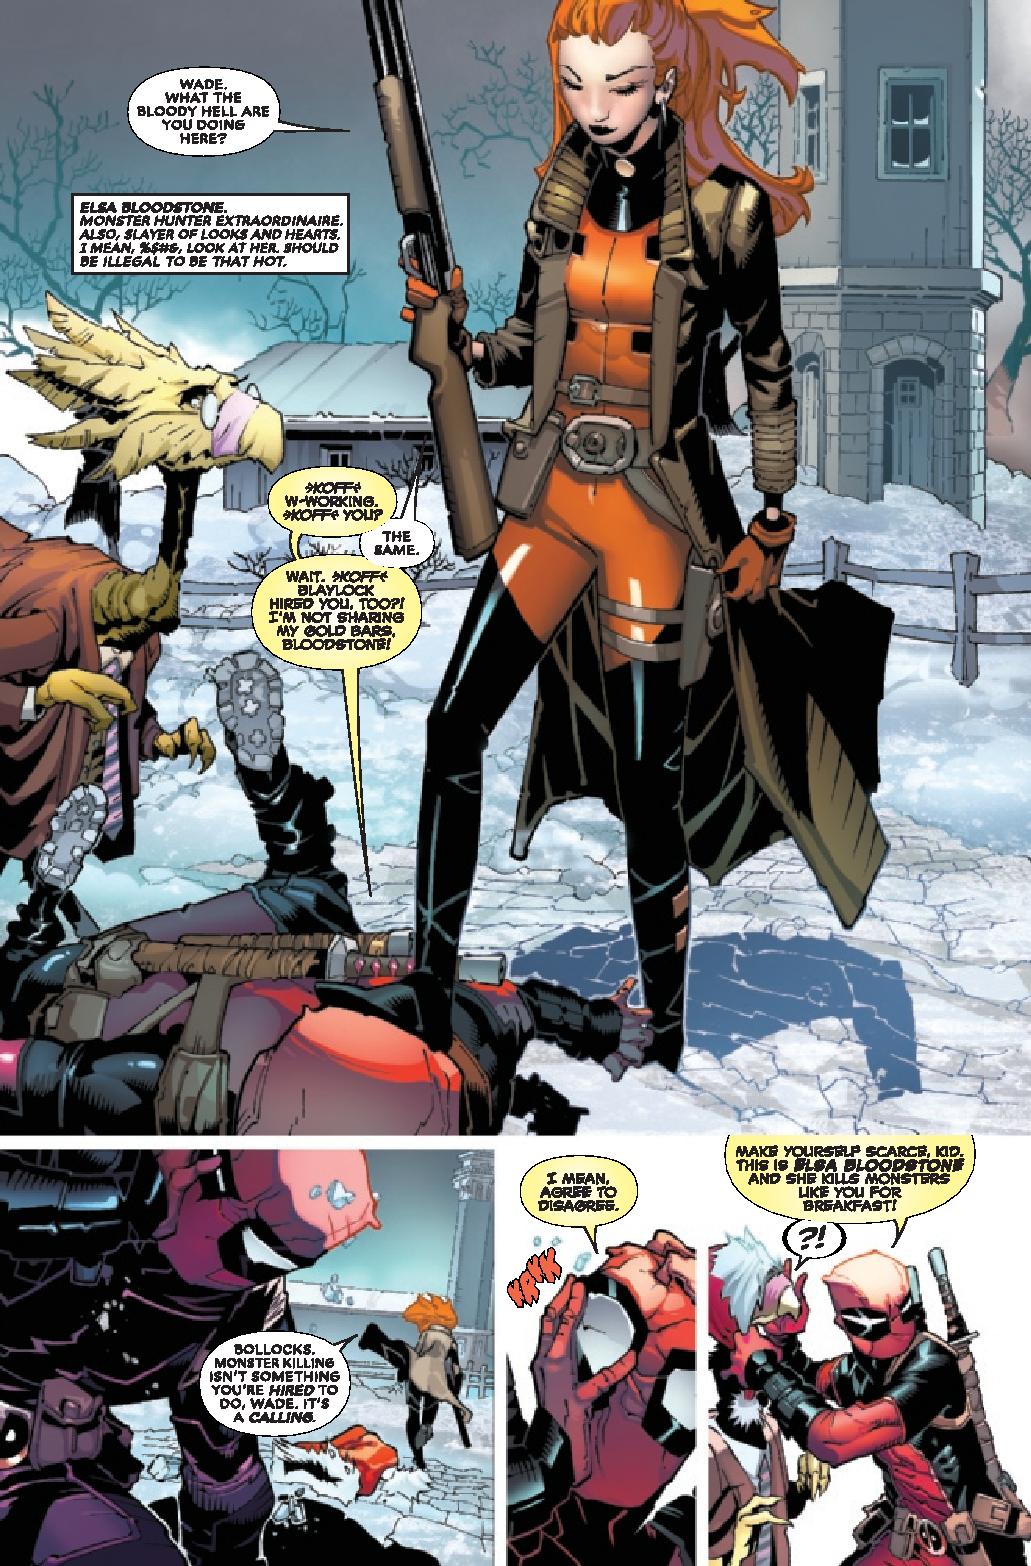 Deadpool #1 Finch Variant